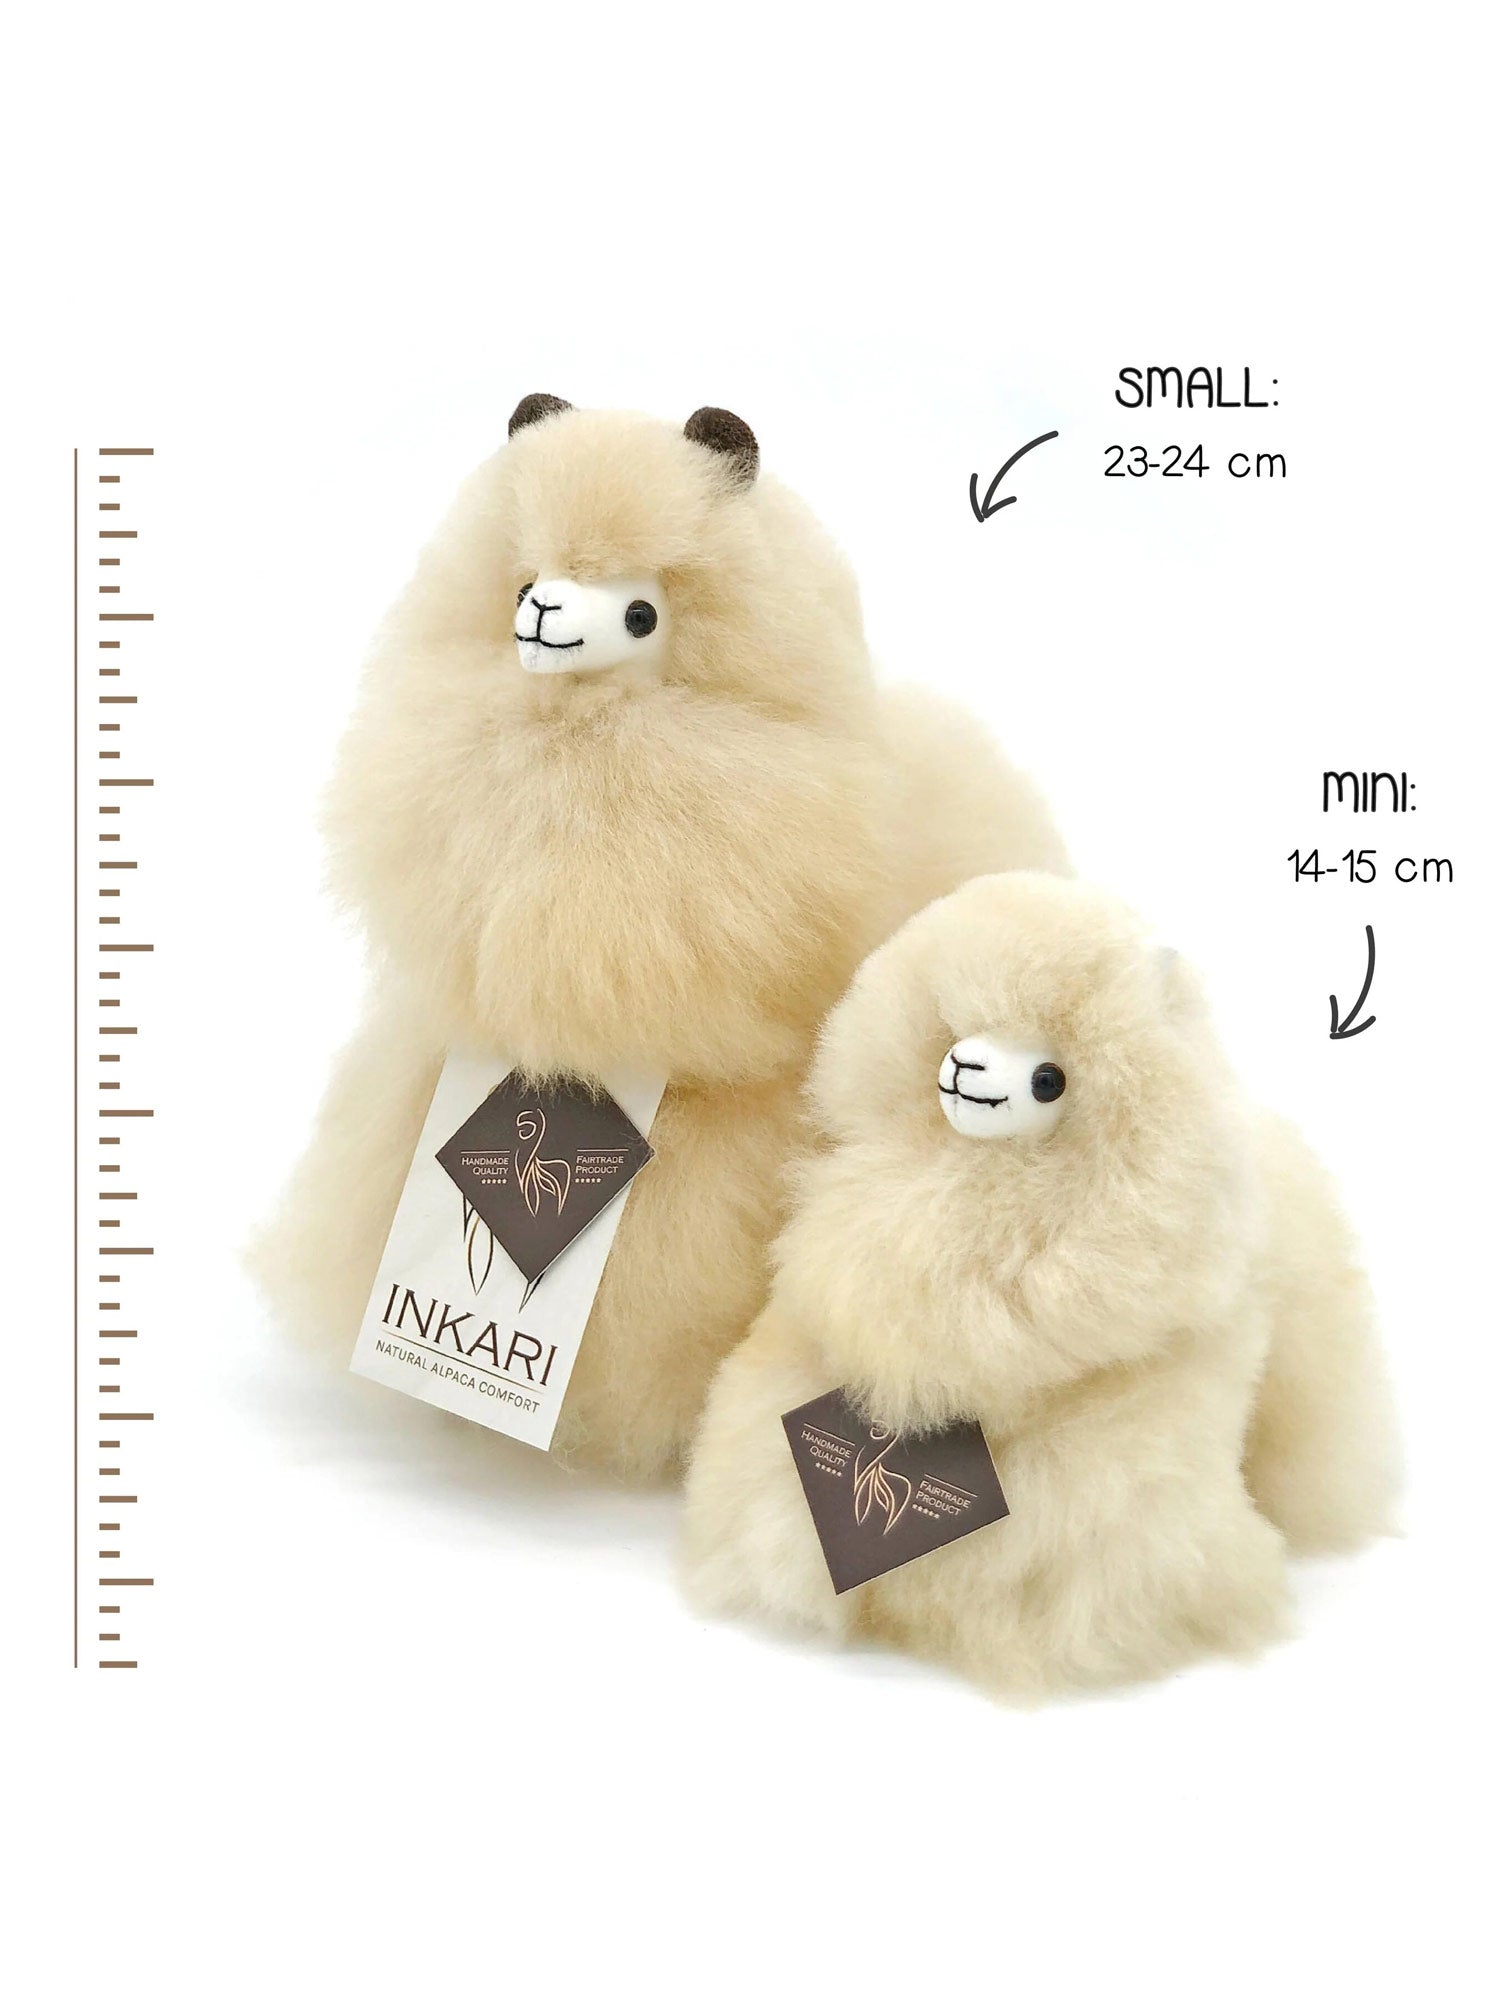 Inkari Alpaca soft toy Naturals - Blond-Mini 15cm